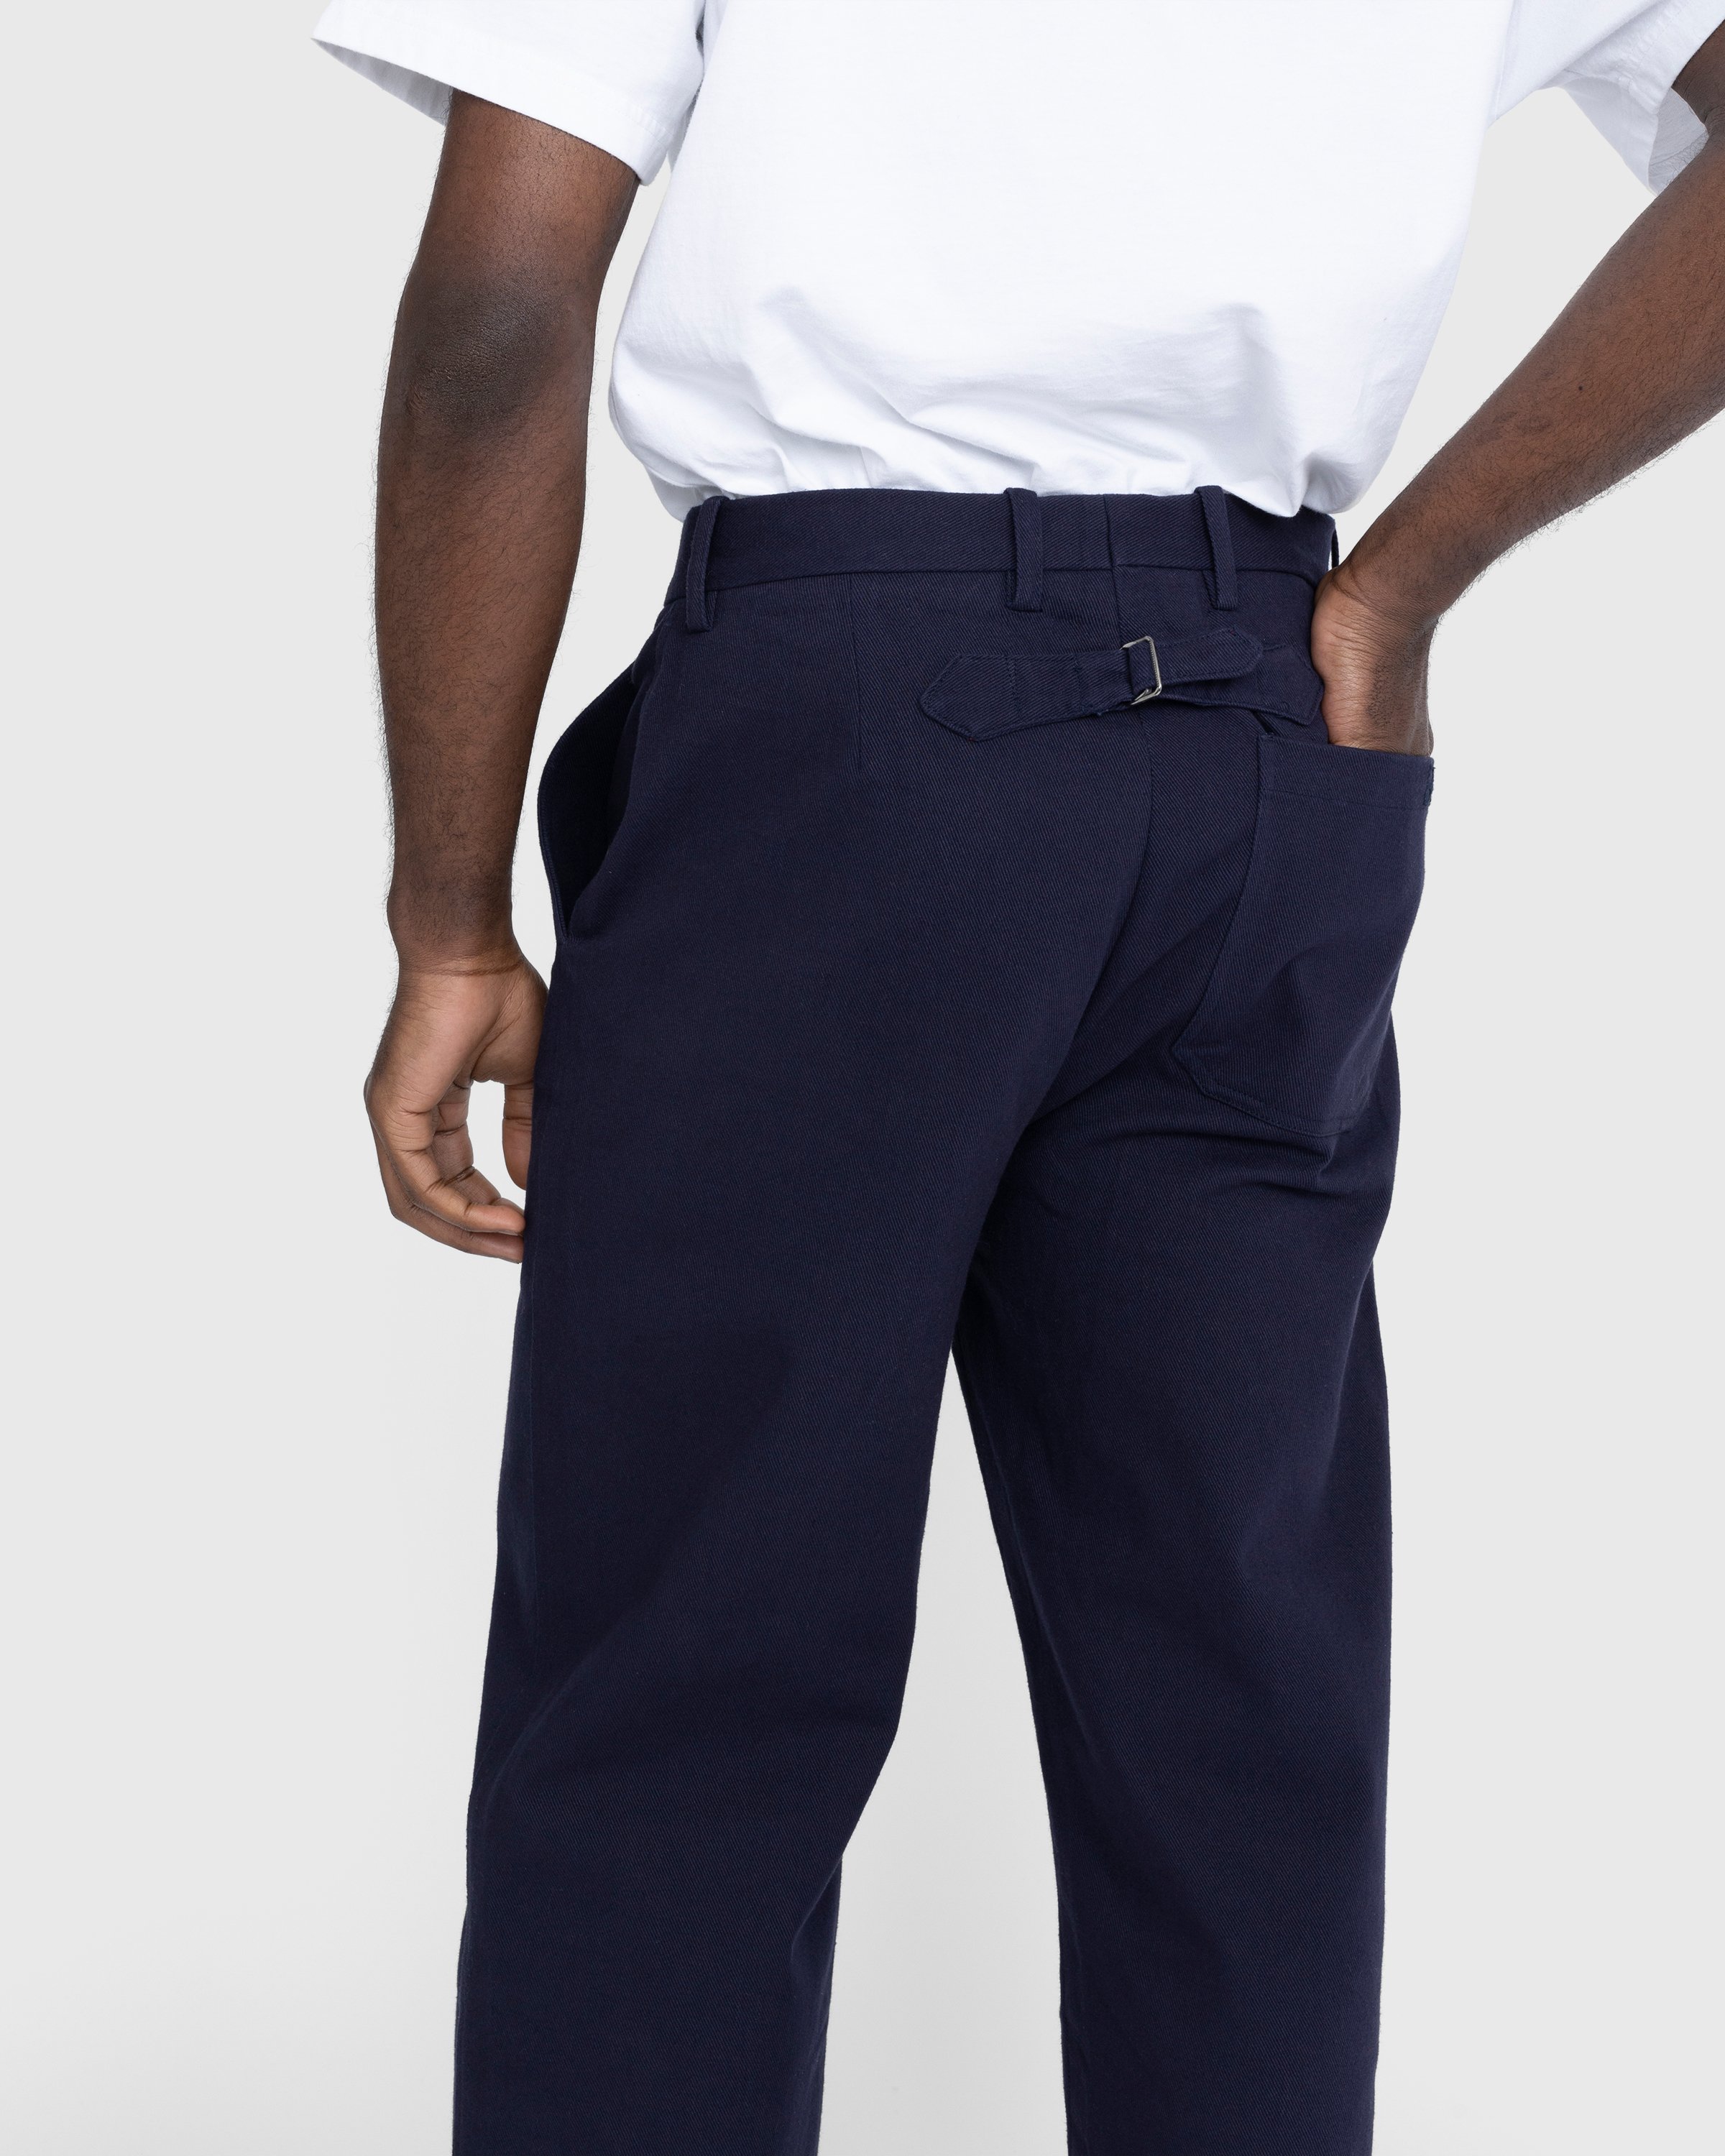 Bode - Standard Trouser Blue - Clothing - Blue - Image 5